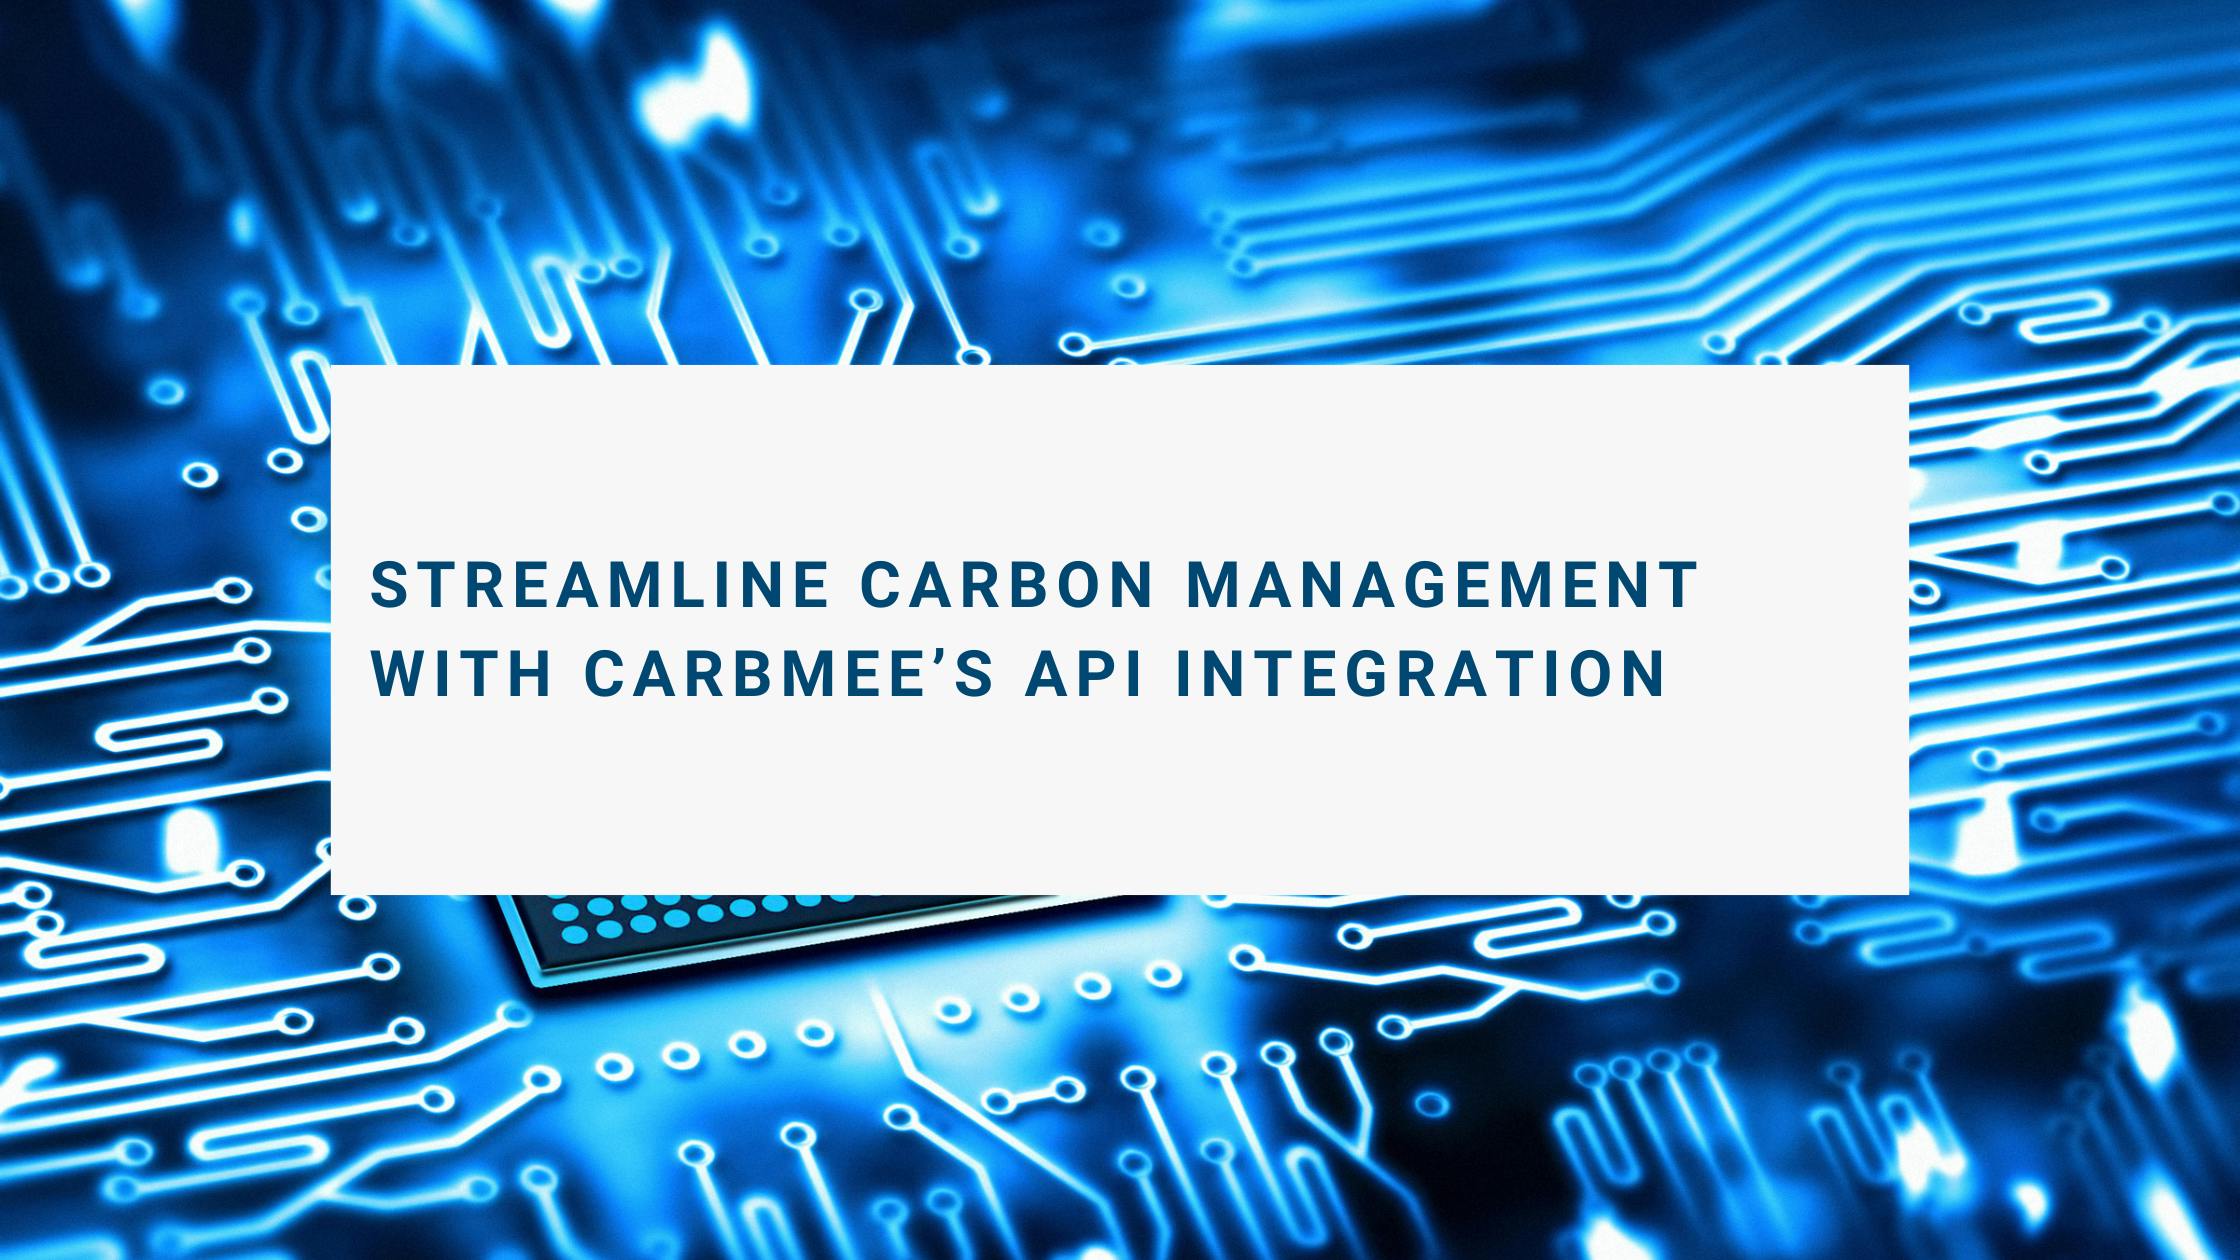 Streamline carbon management with carbmee’s API integration